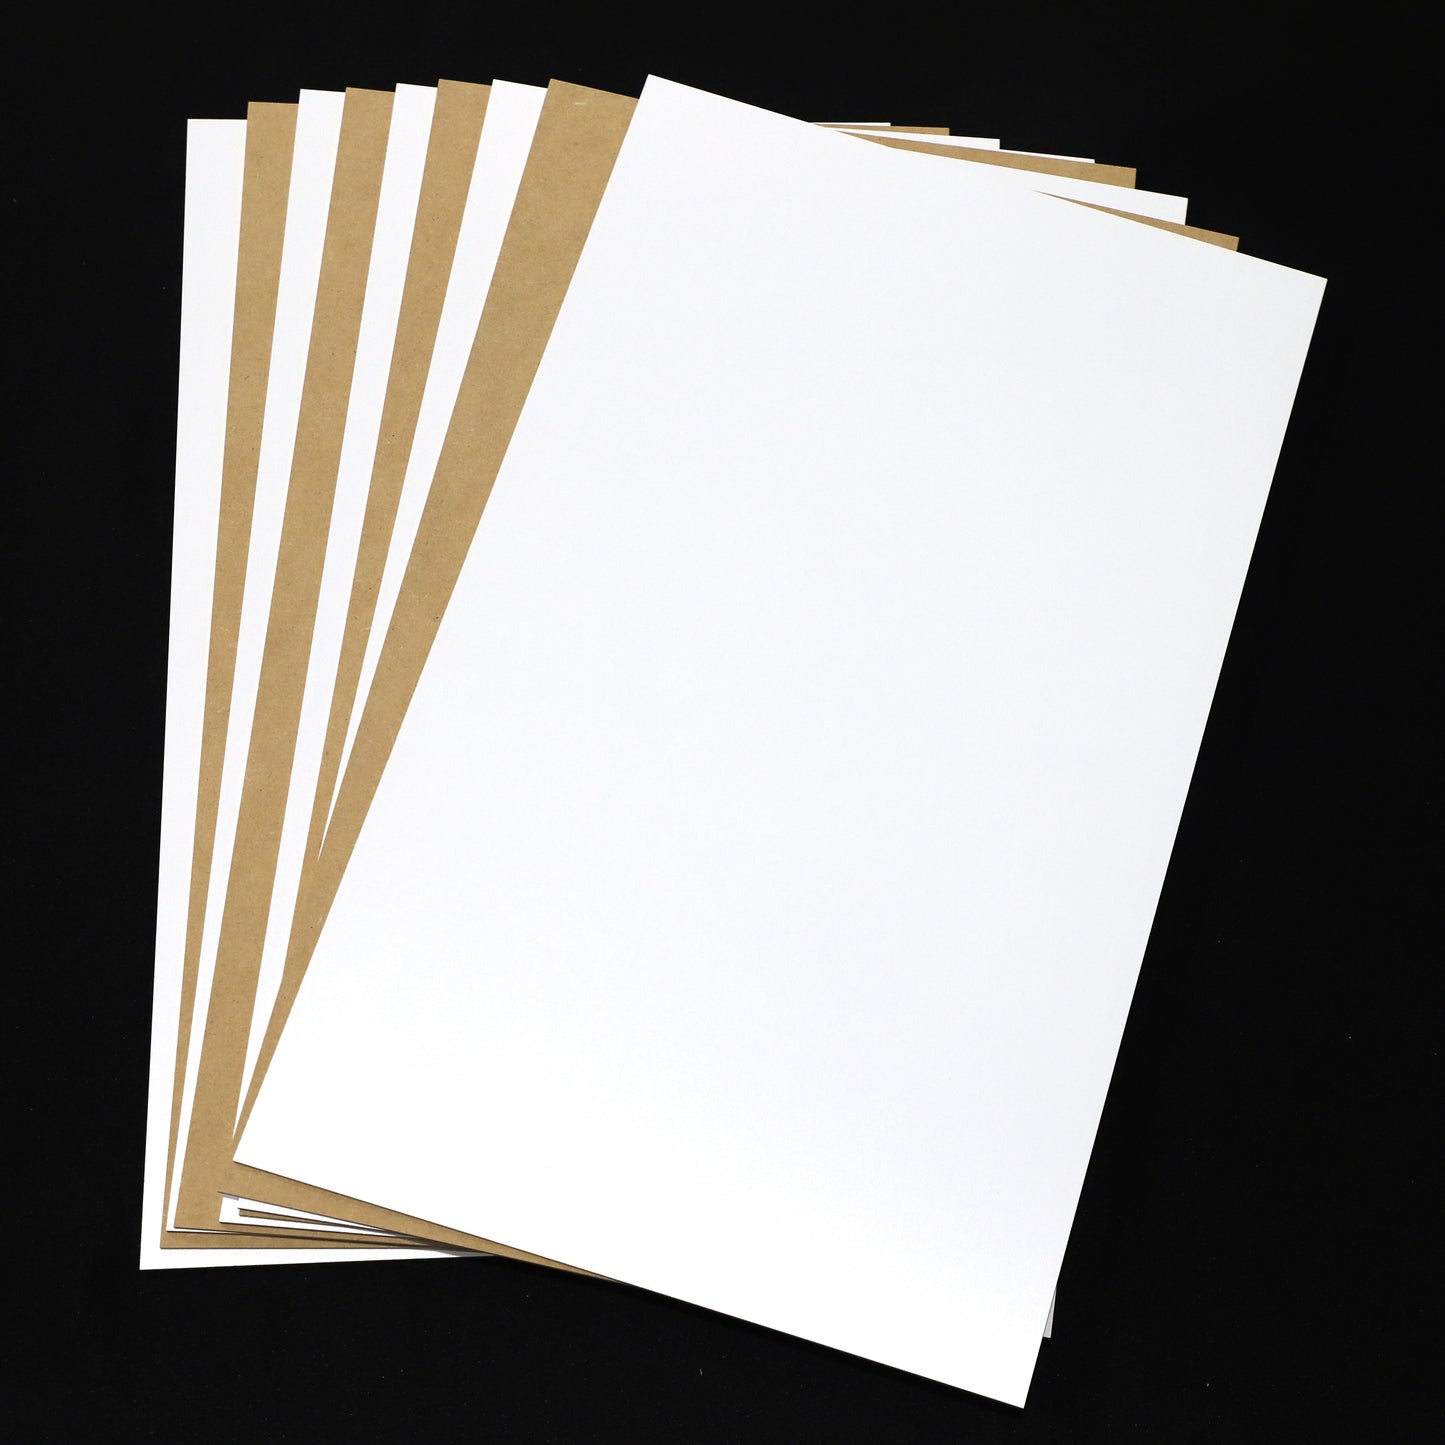 1/8" Premium White Single-Sided MDF Draft Board 11.75" x 14.75"